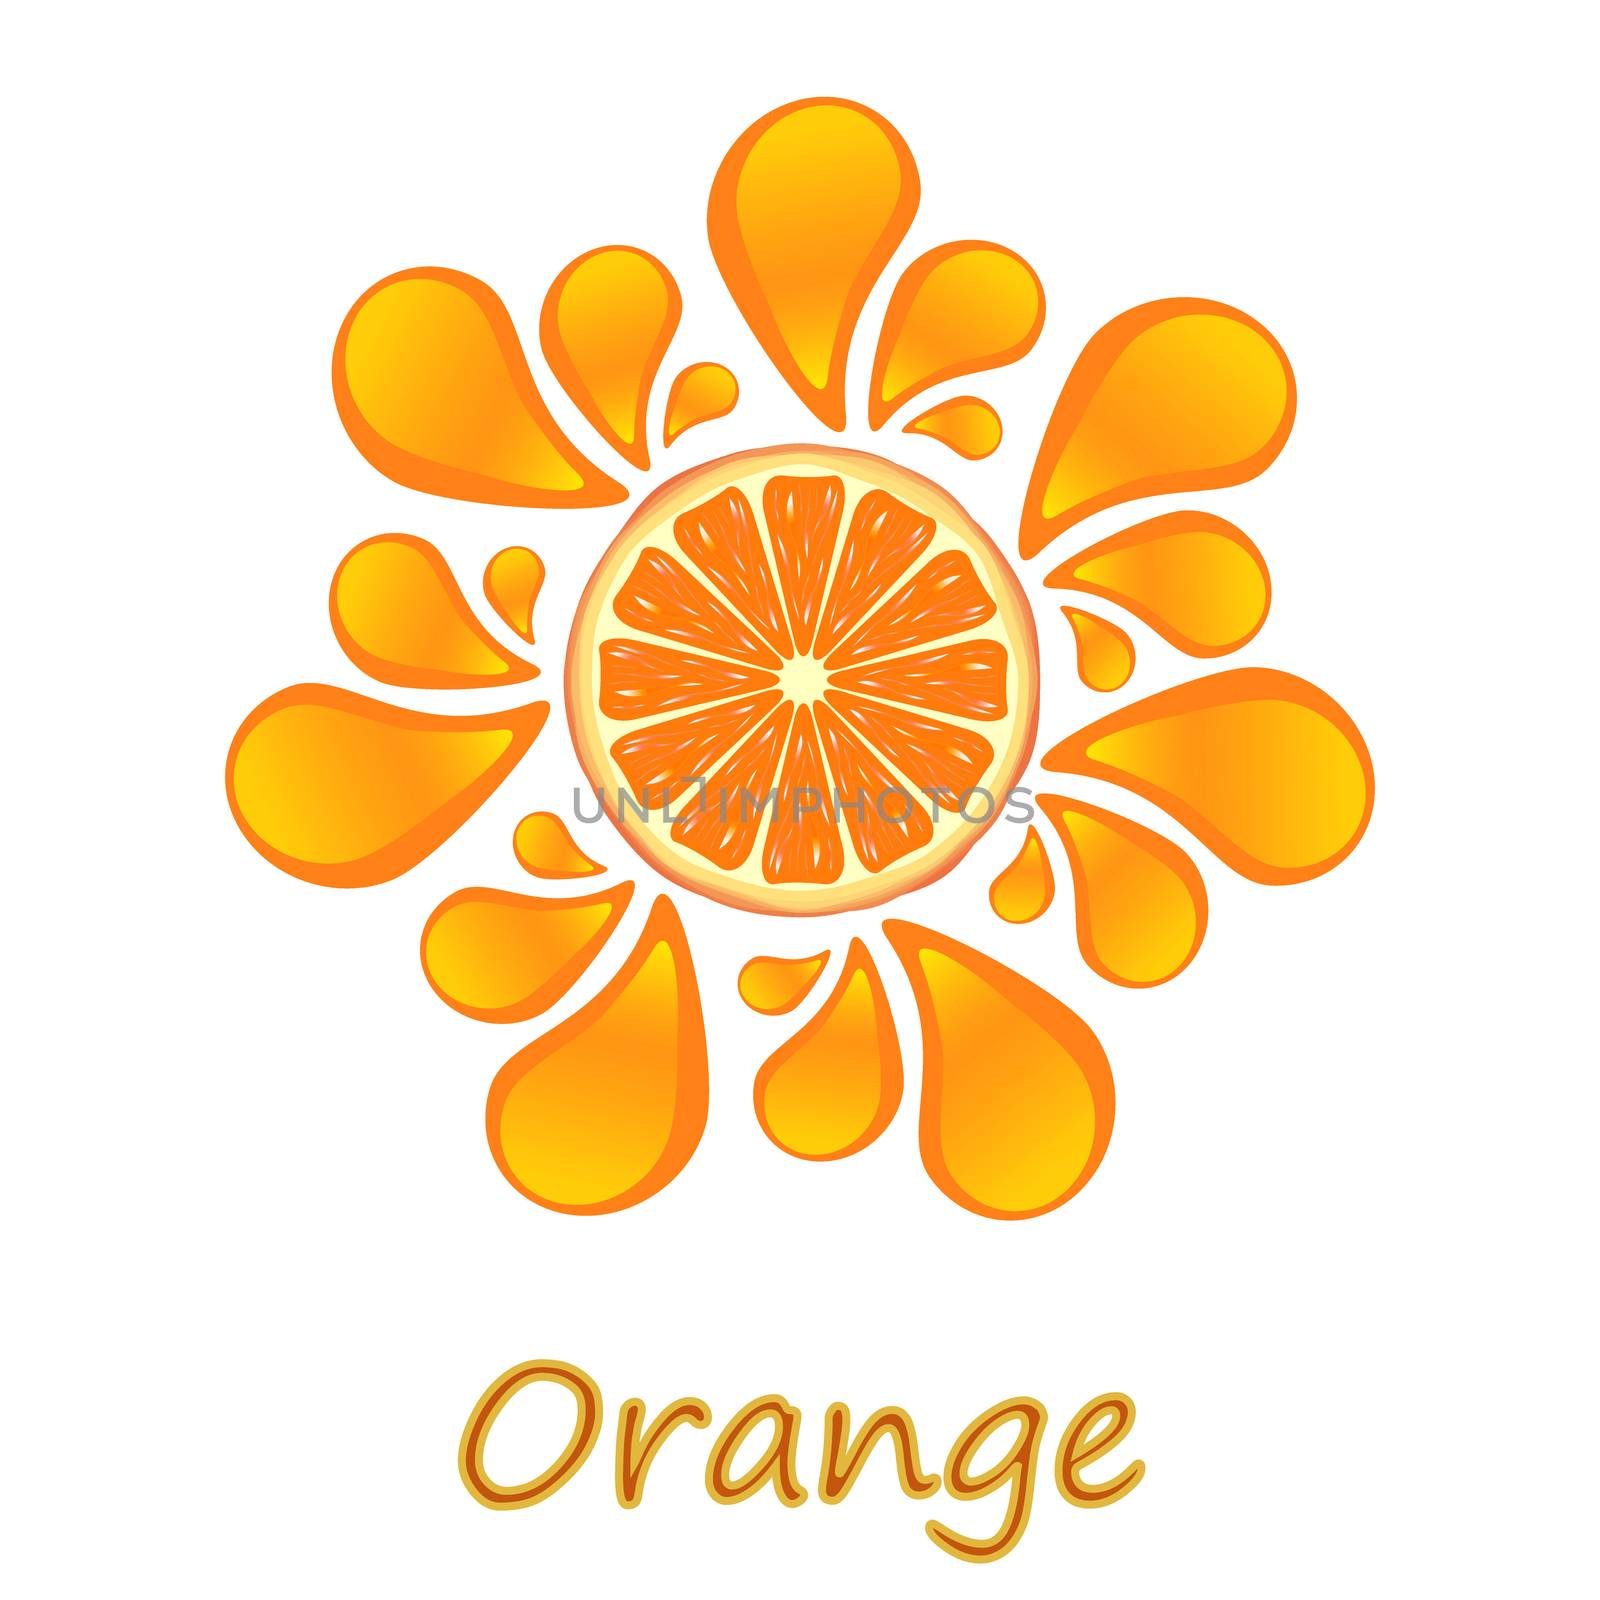 Juicy orange by rinika